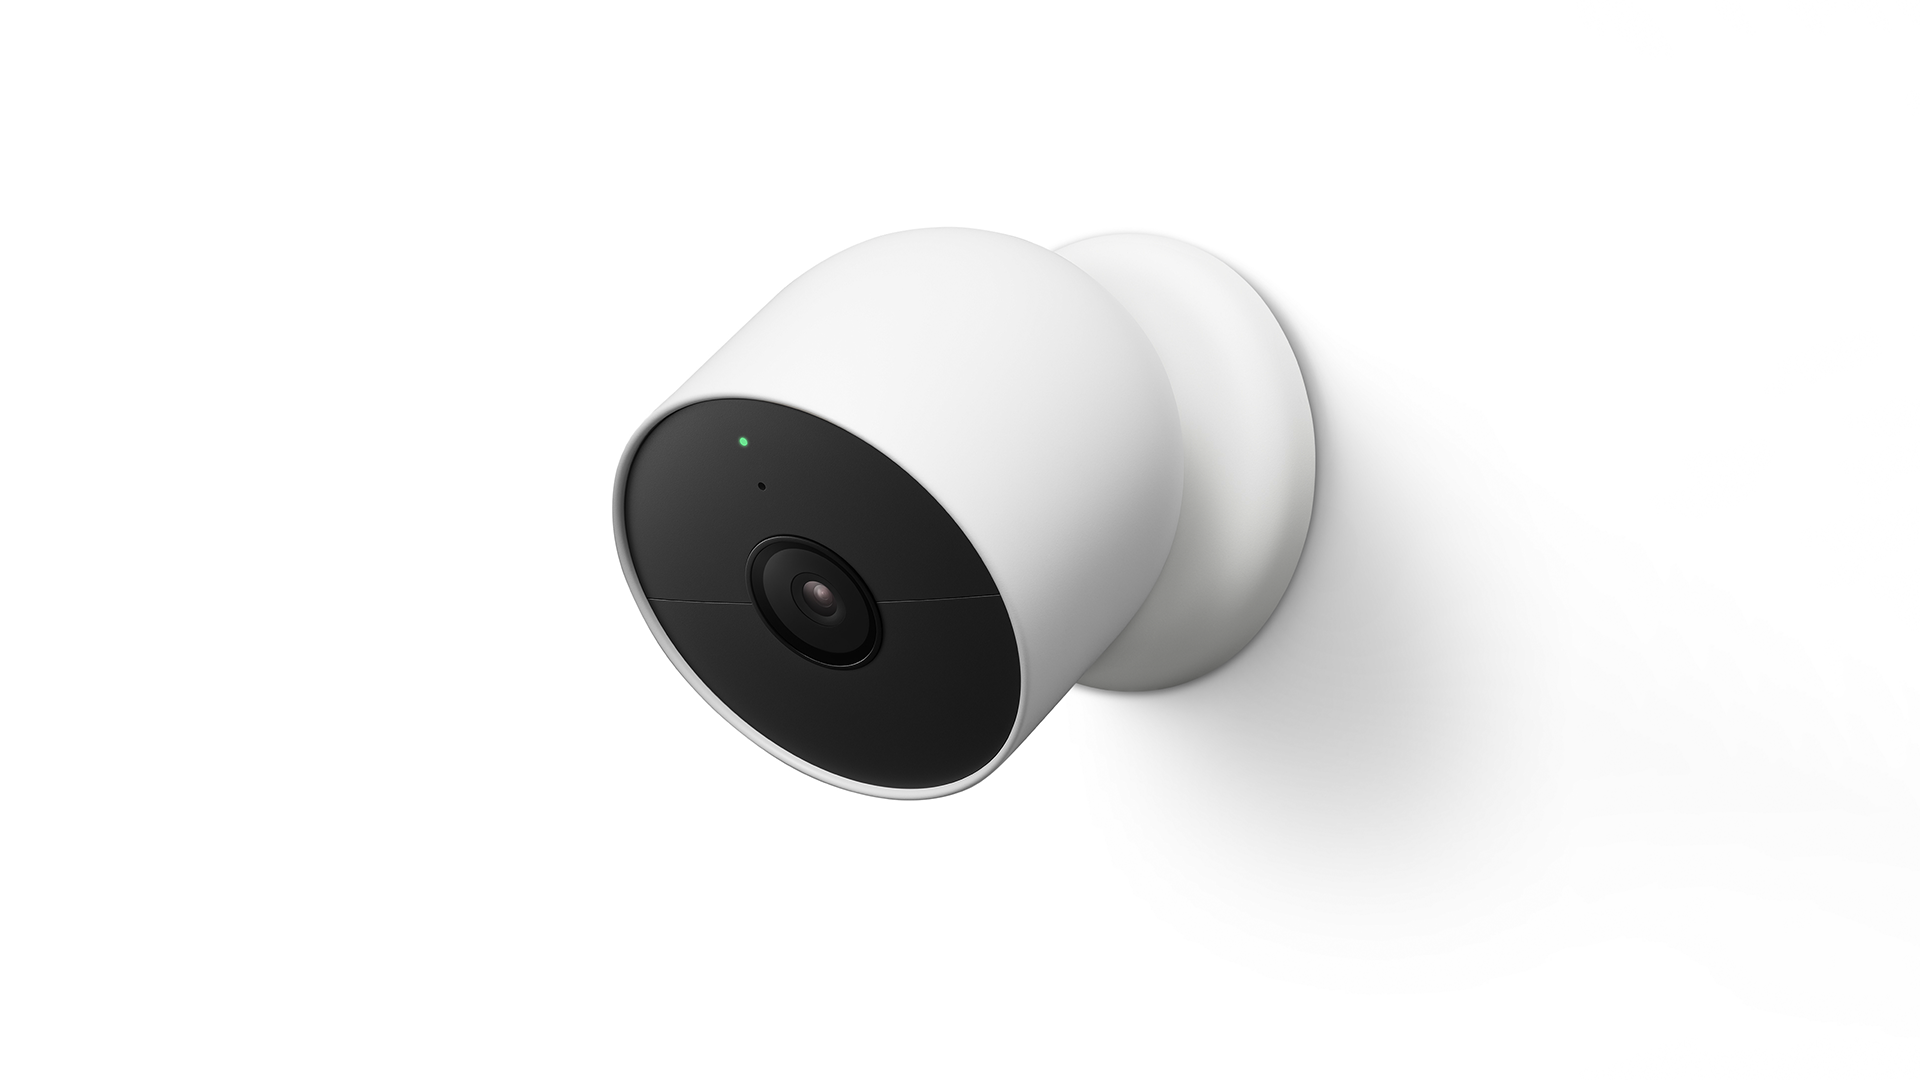 Versi Google Nest Cam (Baterai).